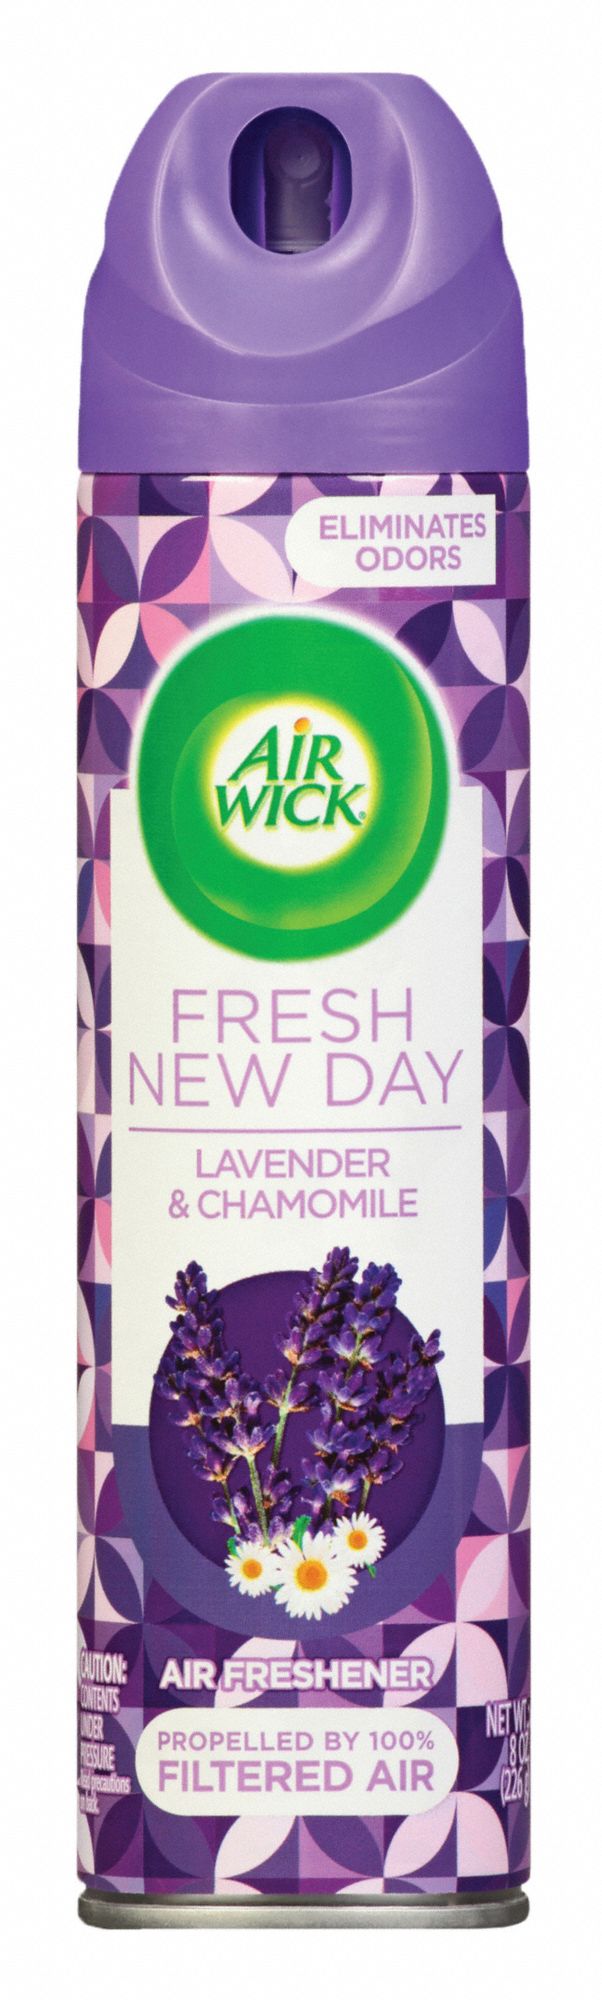 Air Freshener: Air Fresheners, Aerosol Spray Can, 8 oz Container Size, Liquid, 12 PK